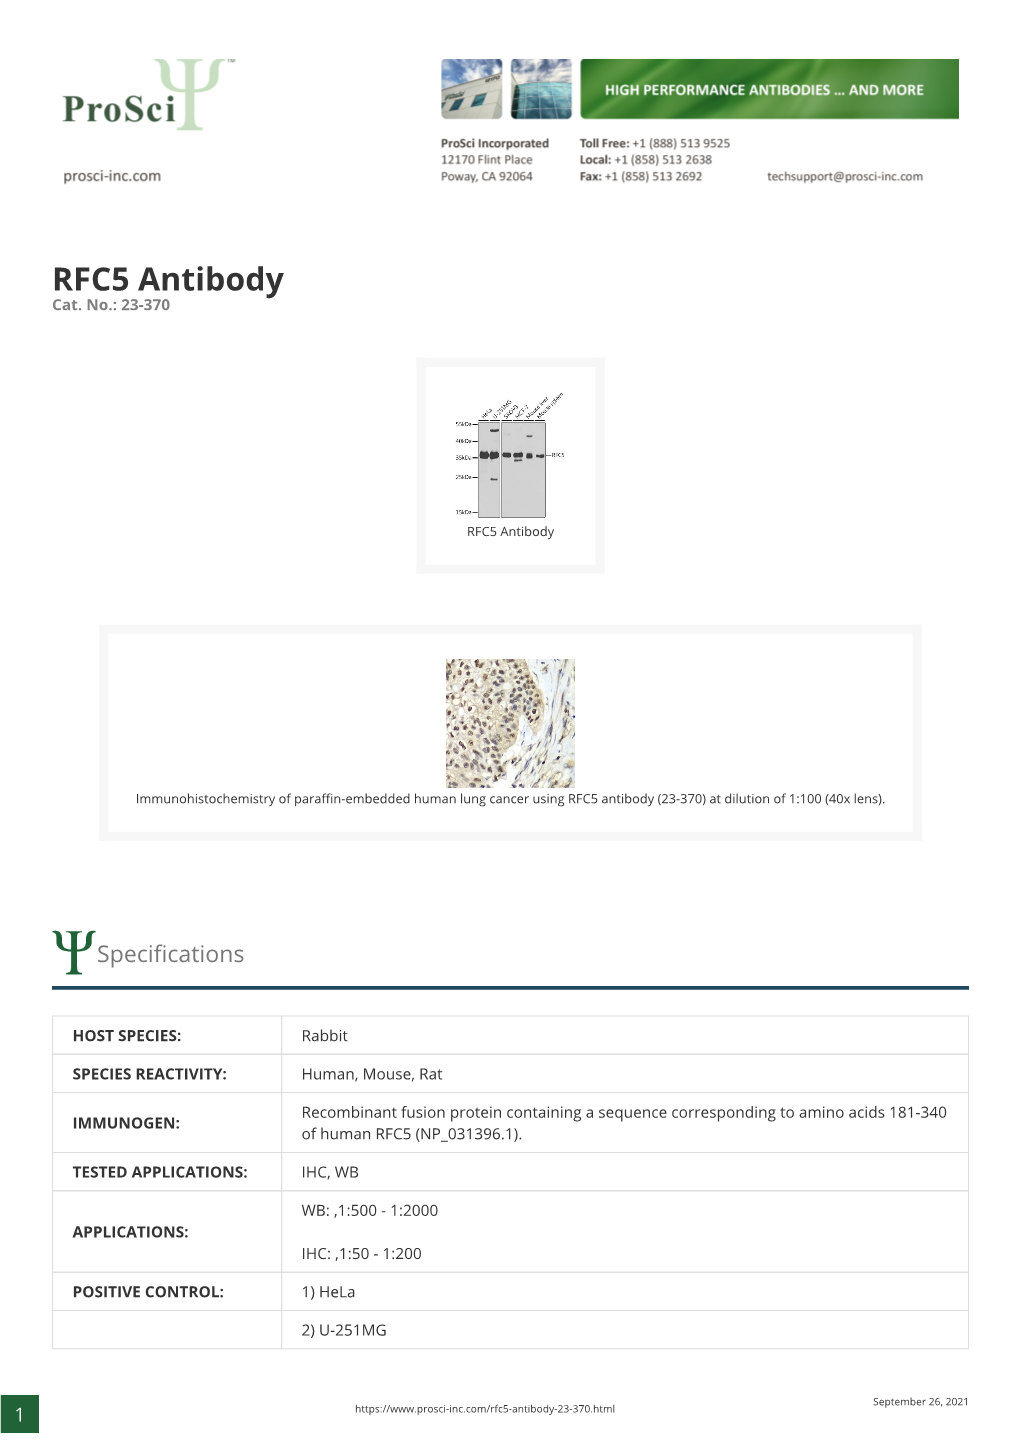 RFC5 Antibody Cat